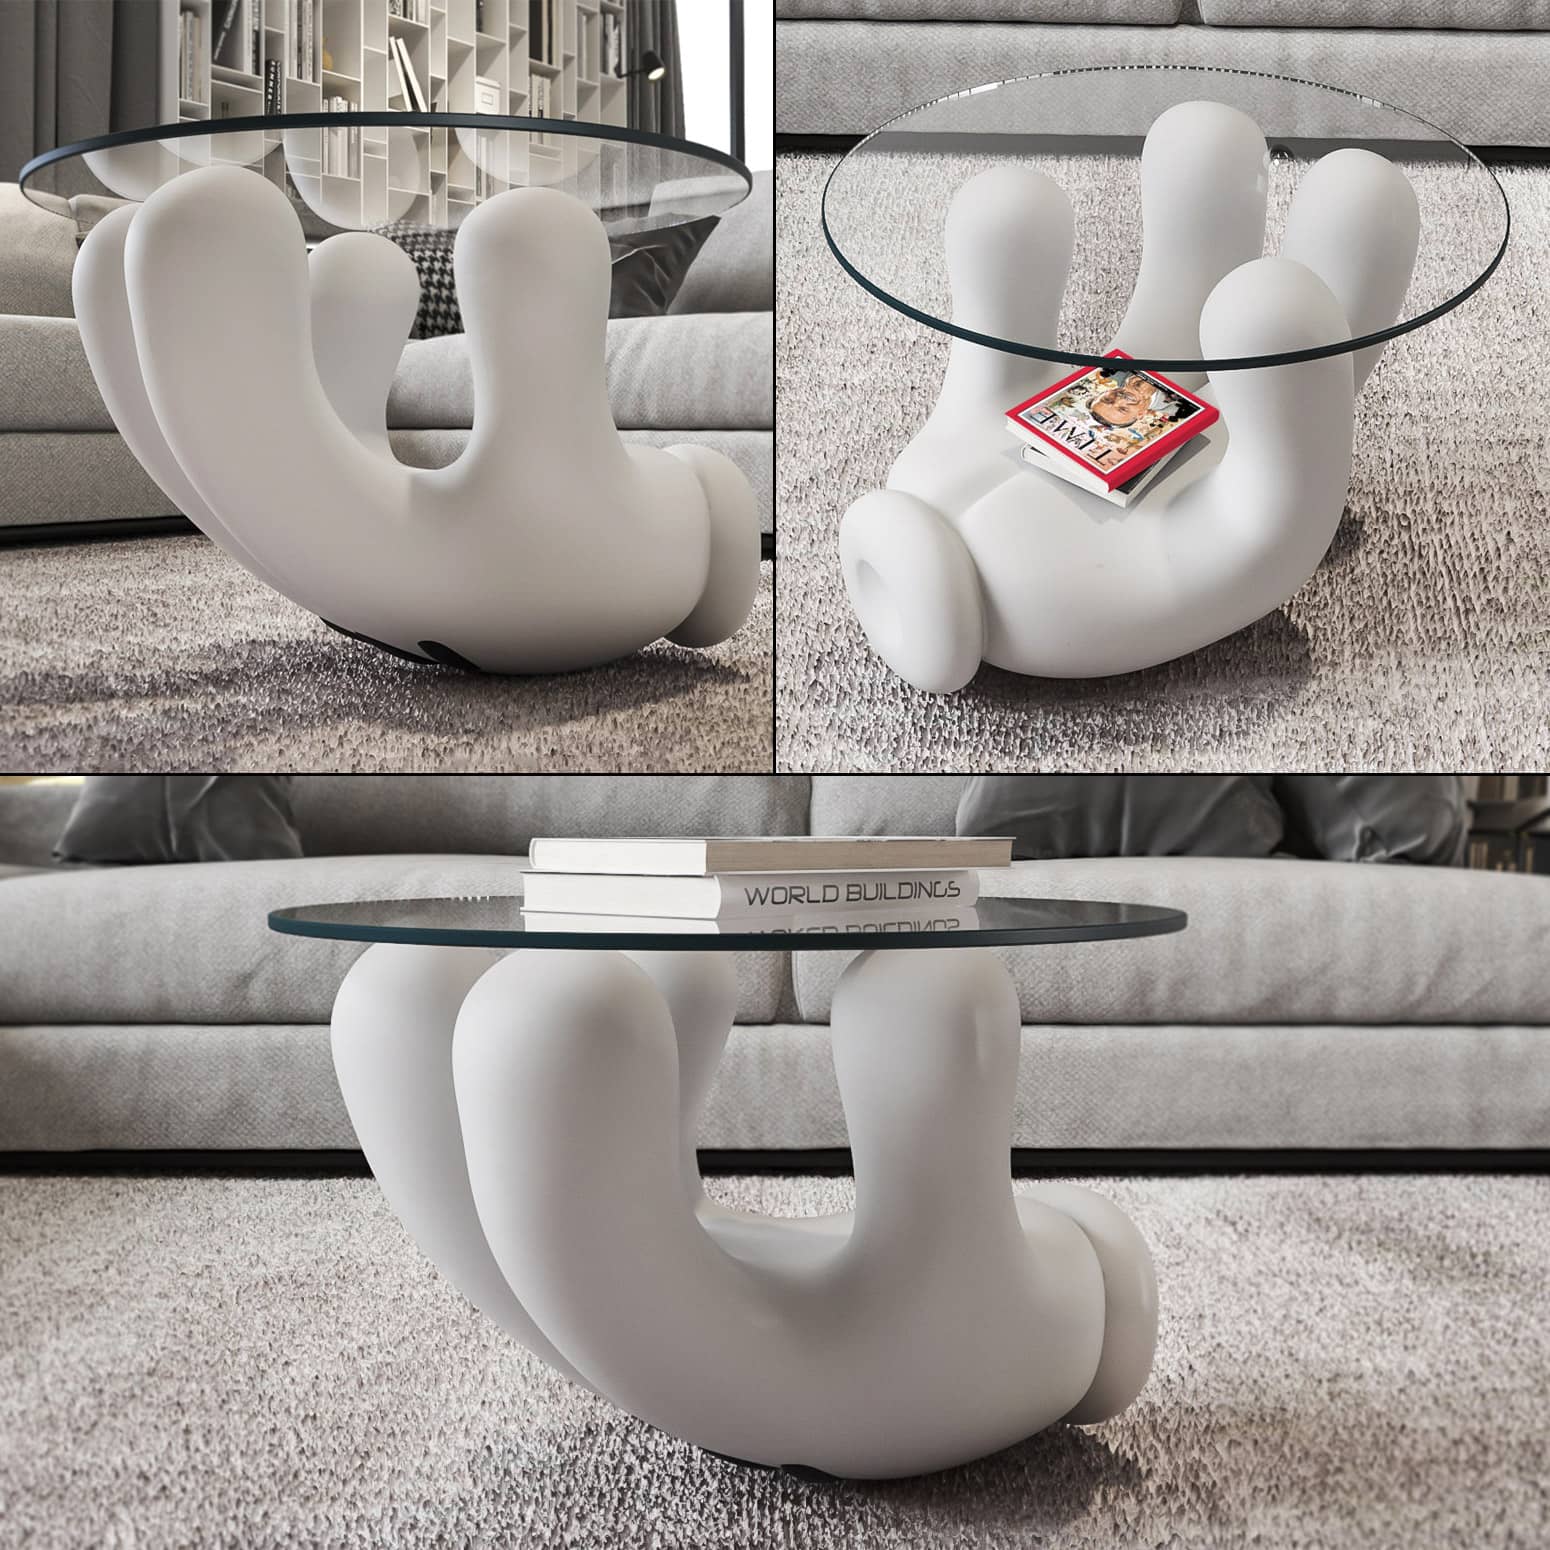 Mousarris Voila! - Gigantic Cartoon Mouse White Glove Coffee Table